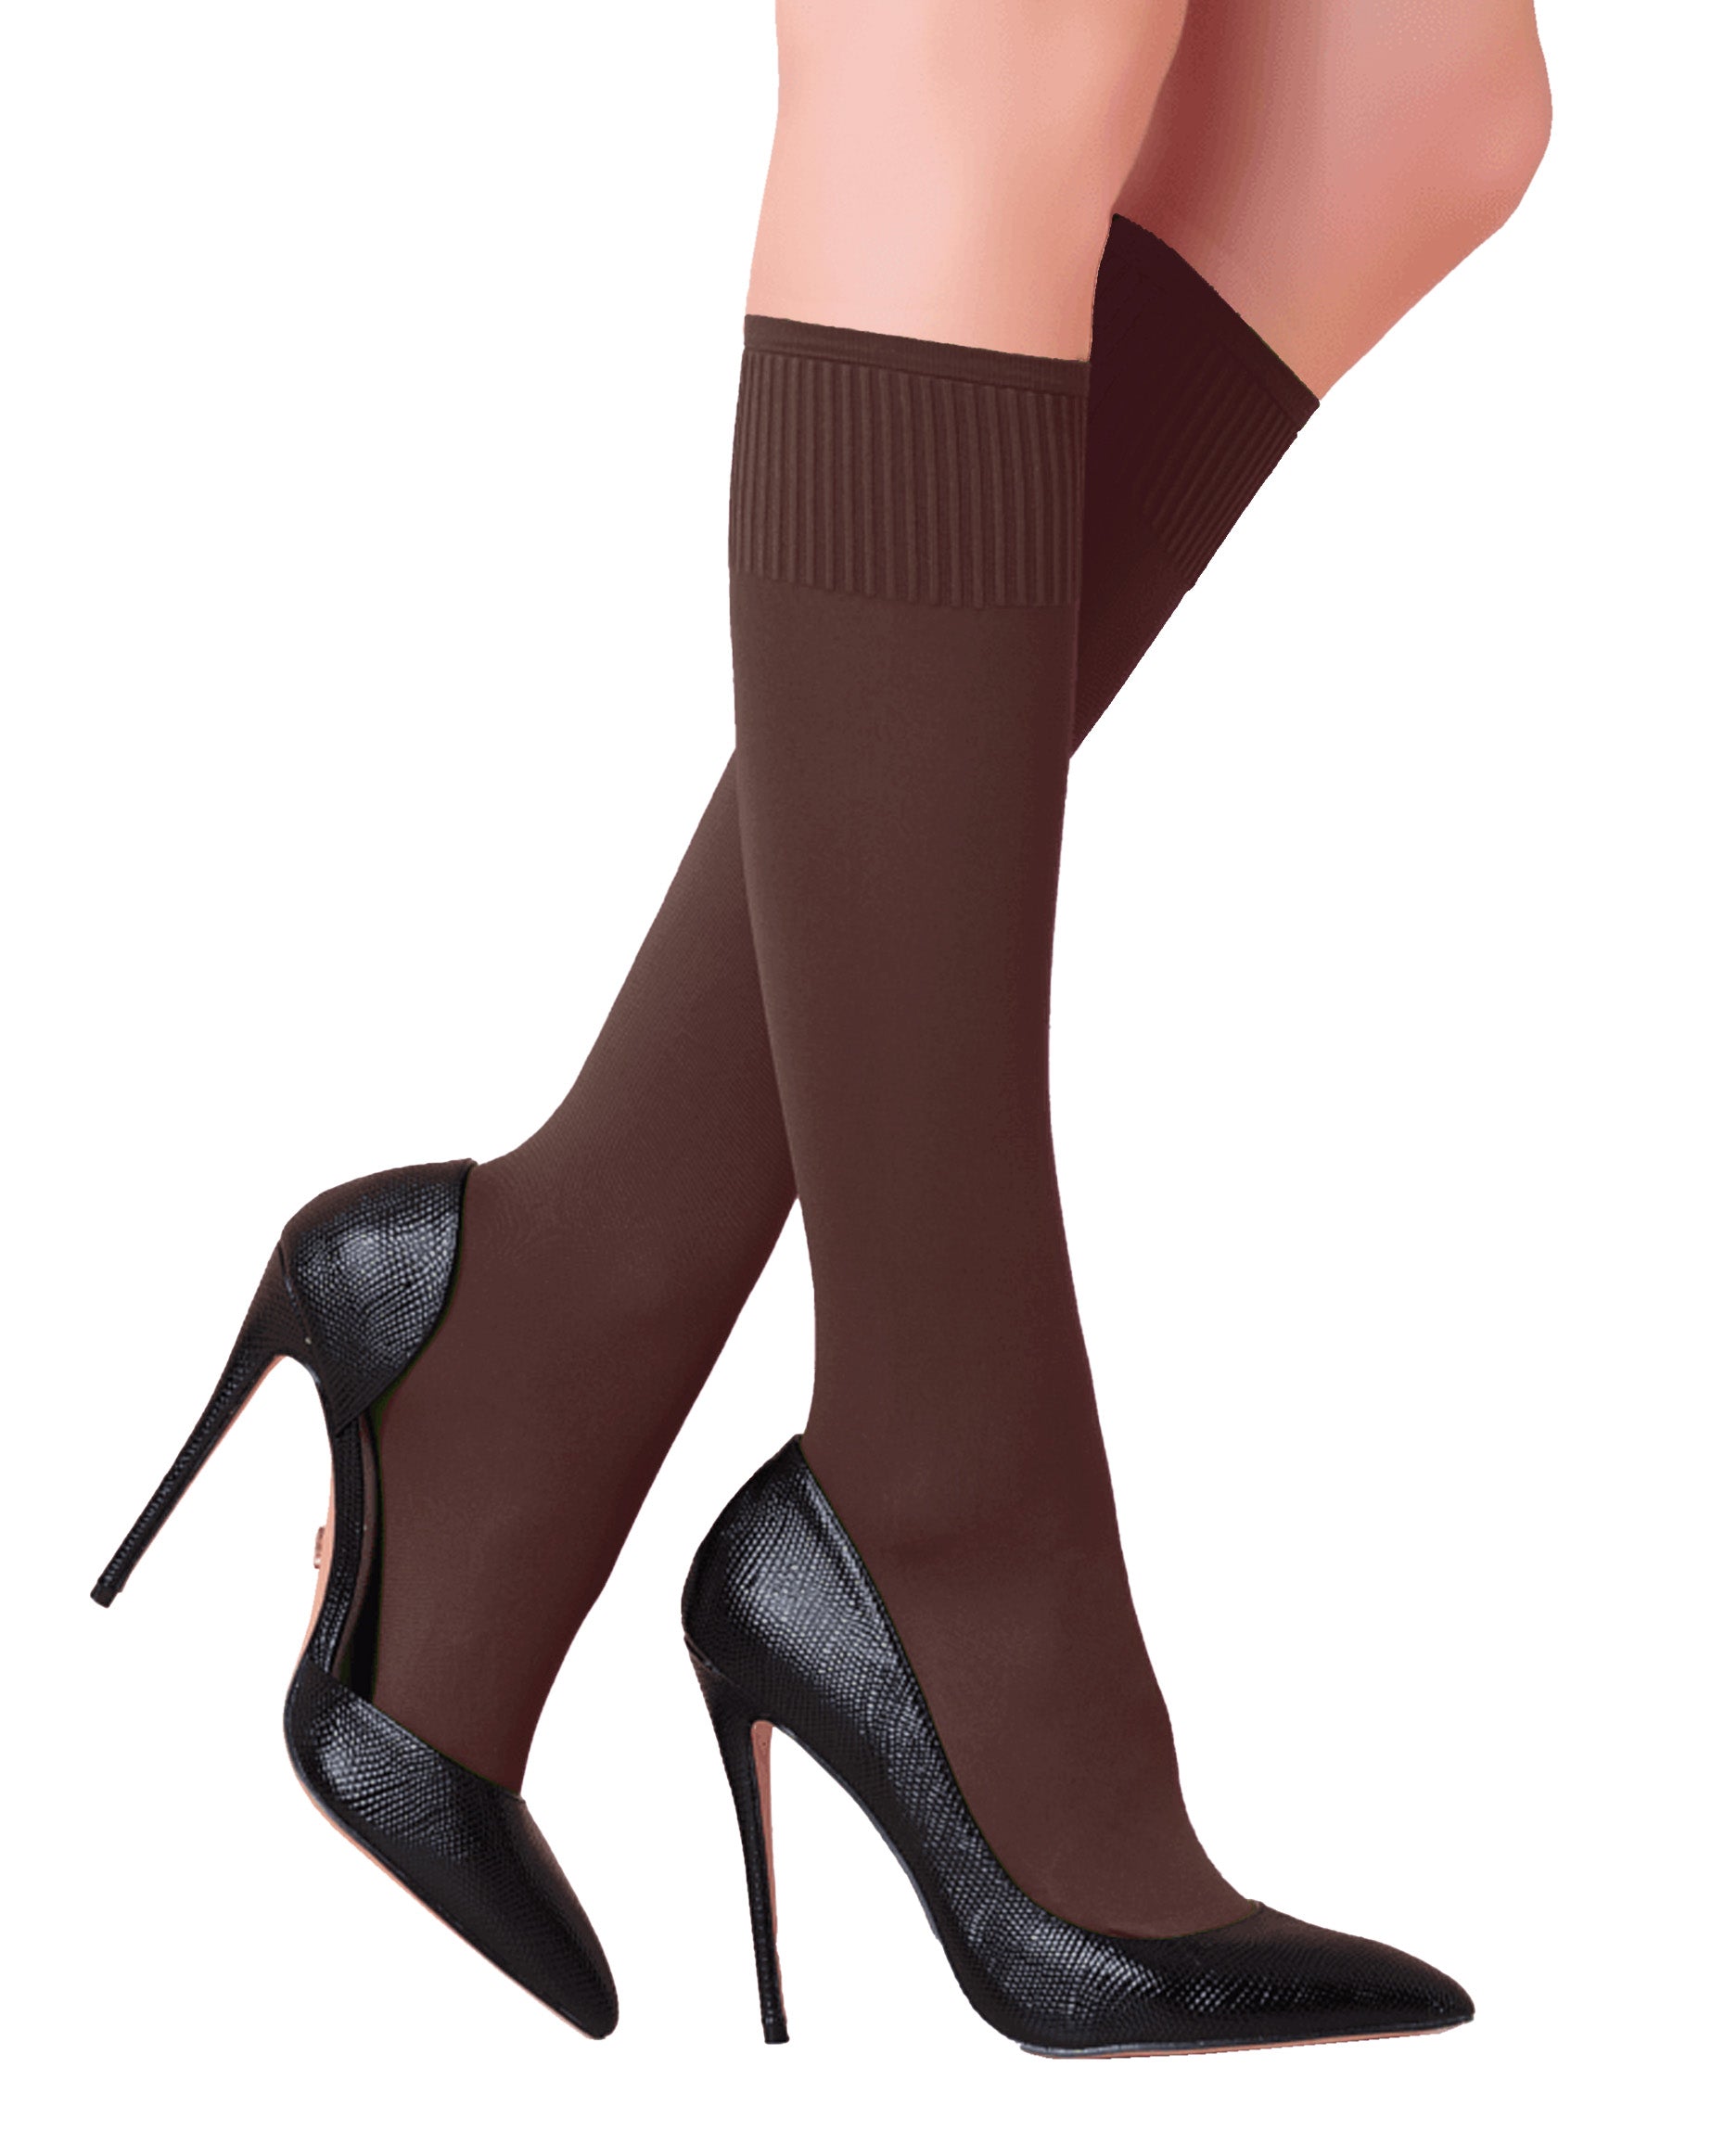 Trasparenze Cinzia Gambaletto - Nutella chocolate brown matte opaque knee-high socks with deep comfort cuffs.